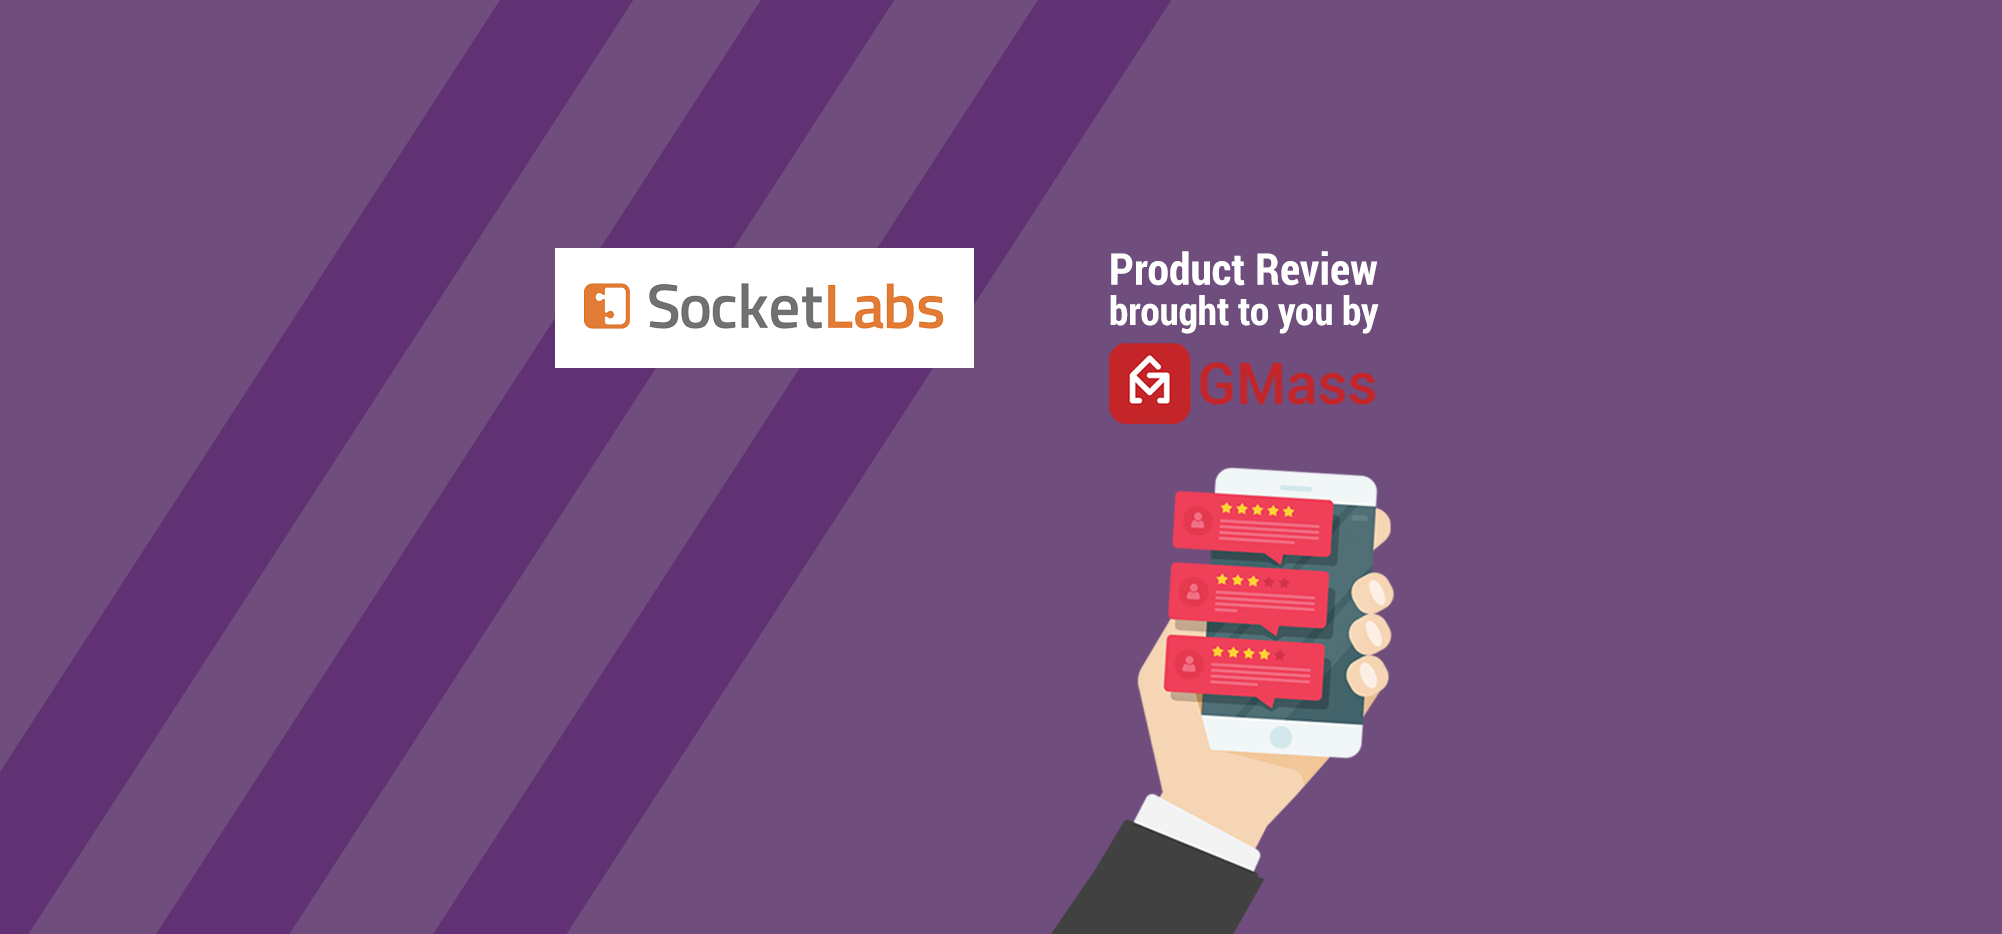 SocketLabs product review